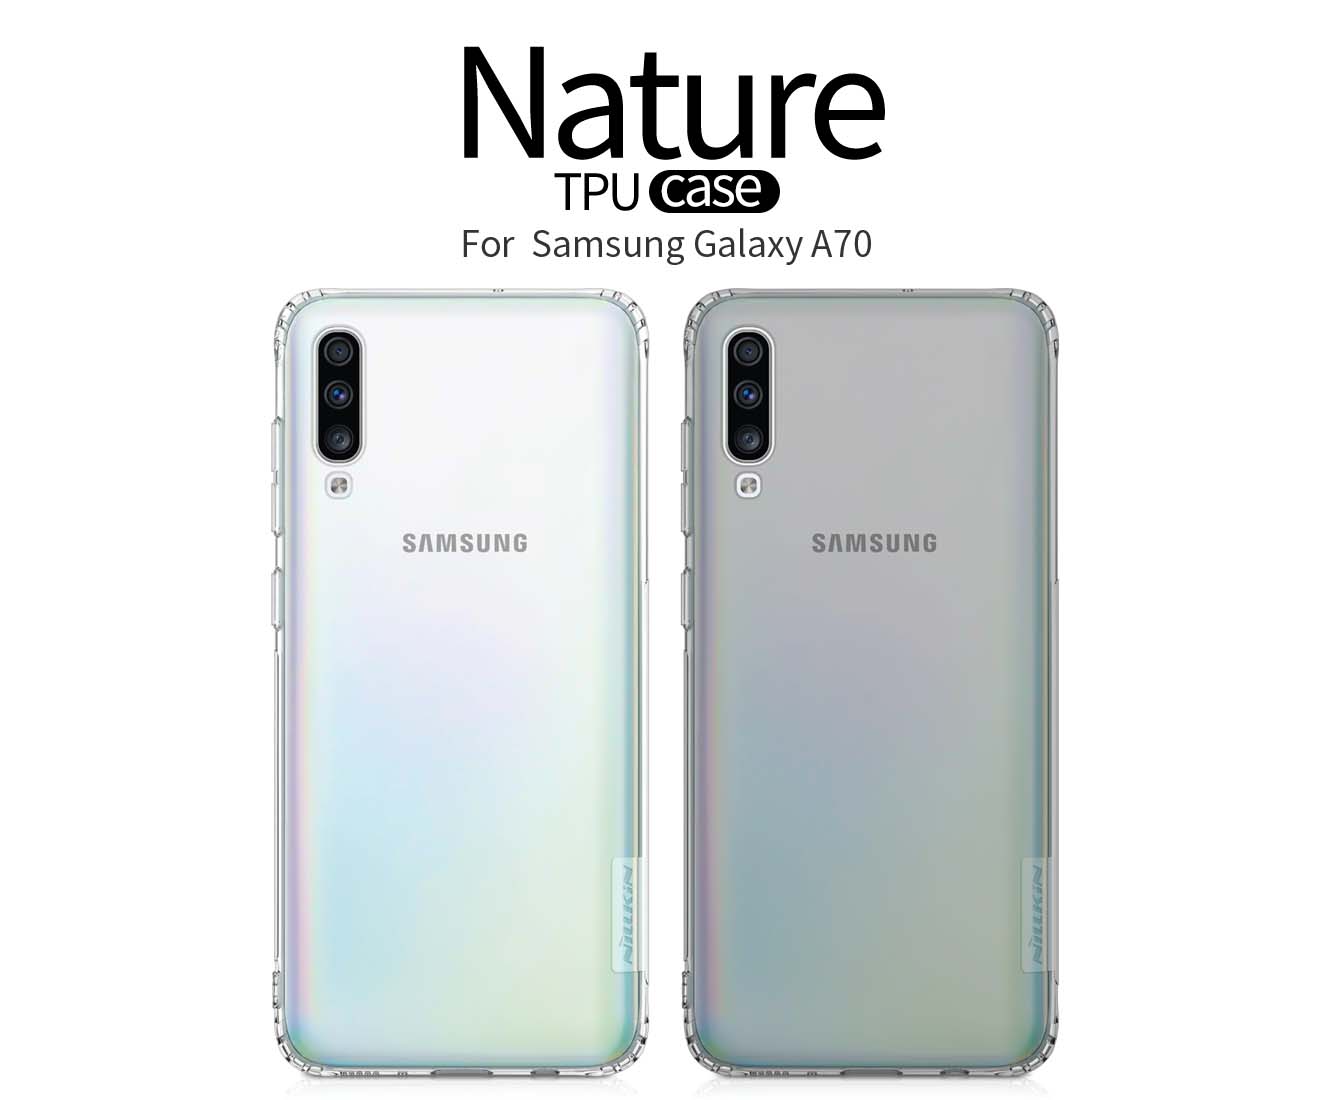 Samsung Galaxy A70 case